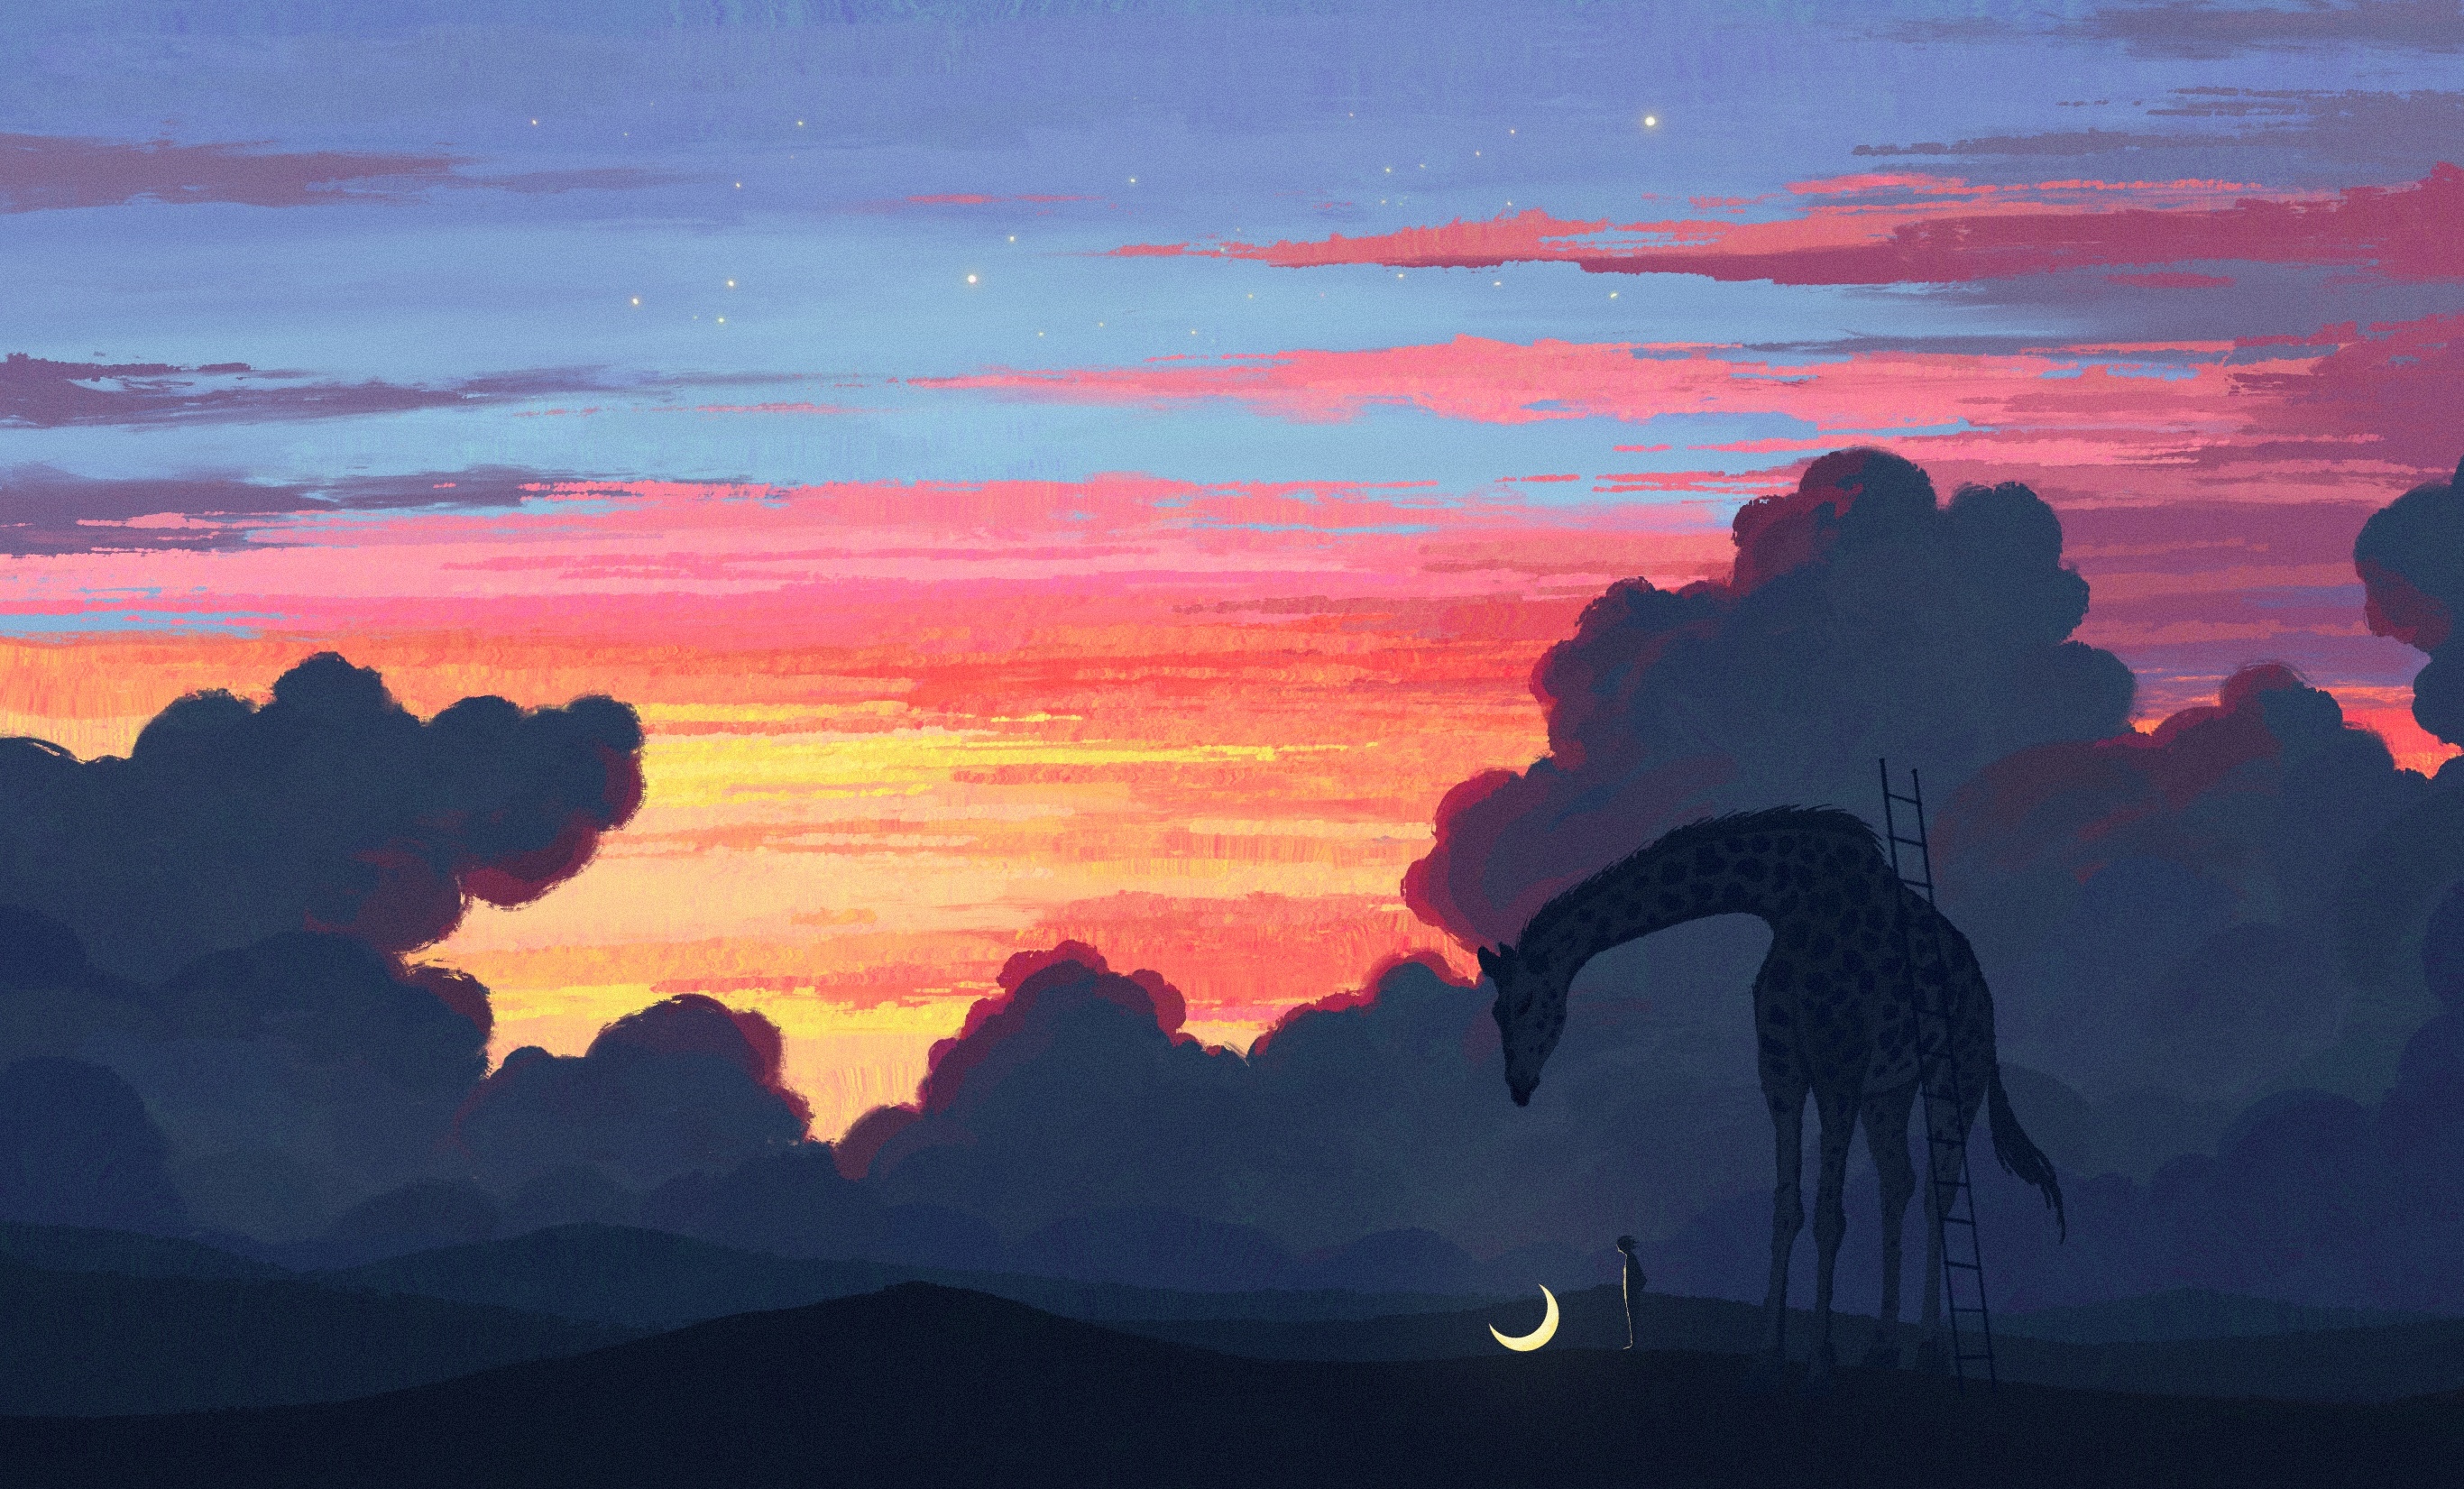 Fangpeii Digital Art Illustration Artwork Landscape Clouds Sky Giraffes Animals Moon Sunset Nature S 2732x1651